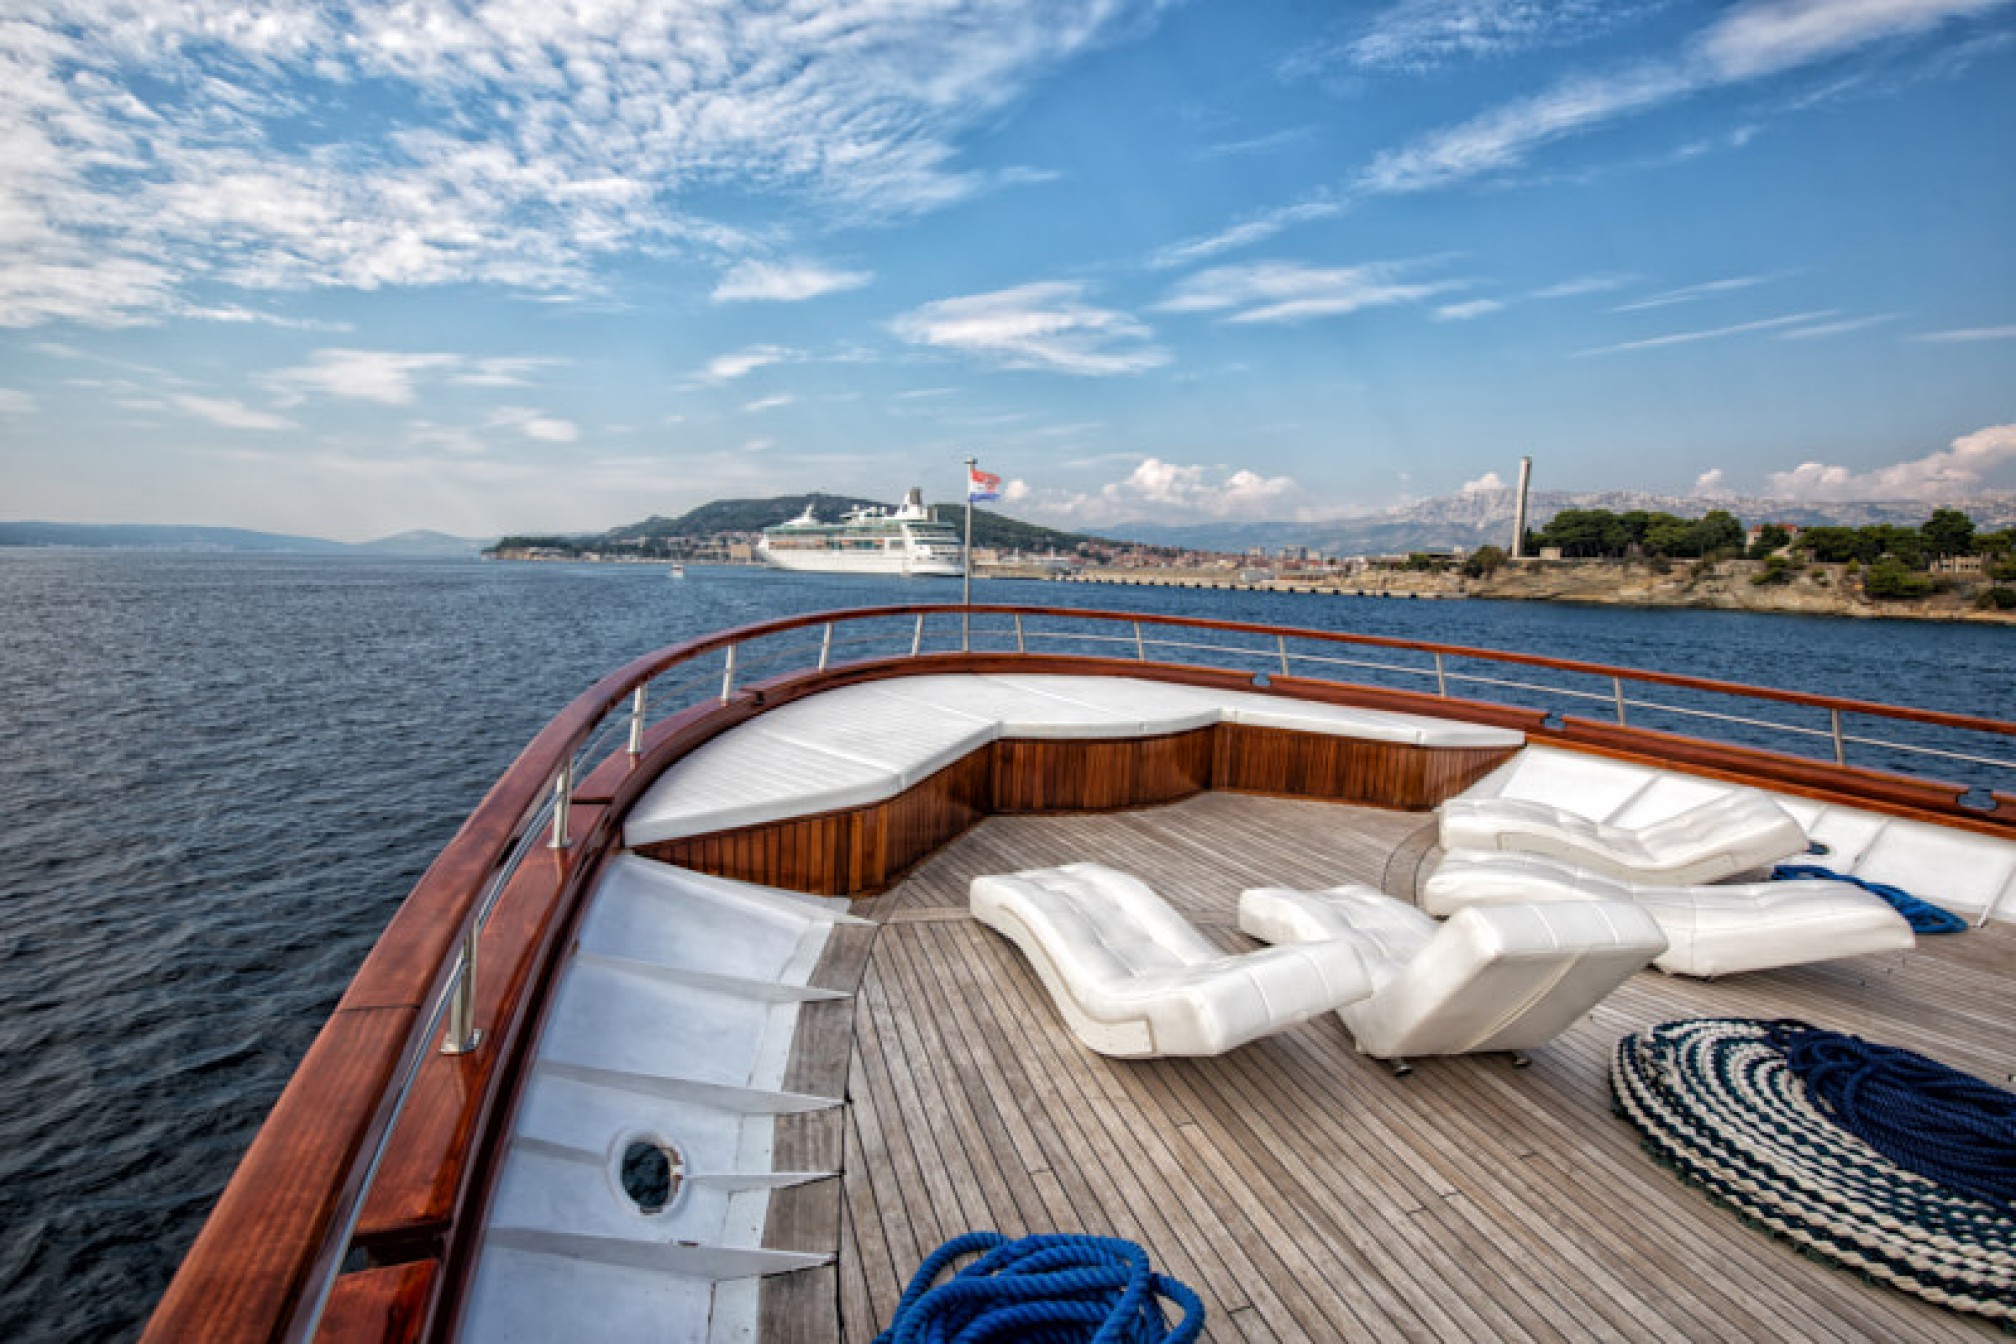 Rental yacht President 40 pax sundeck